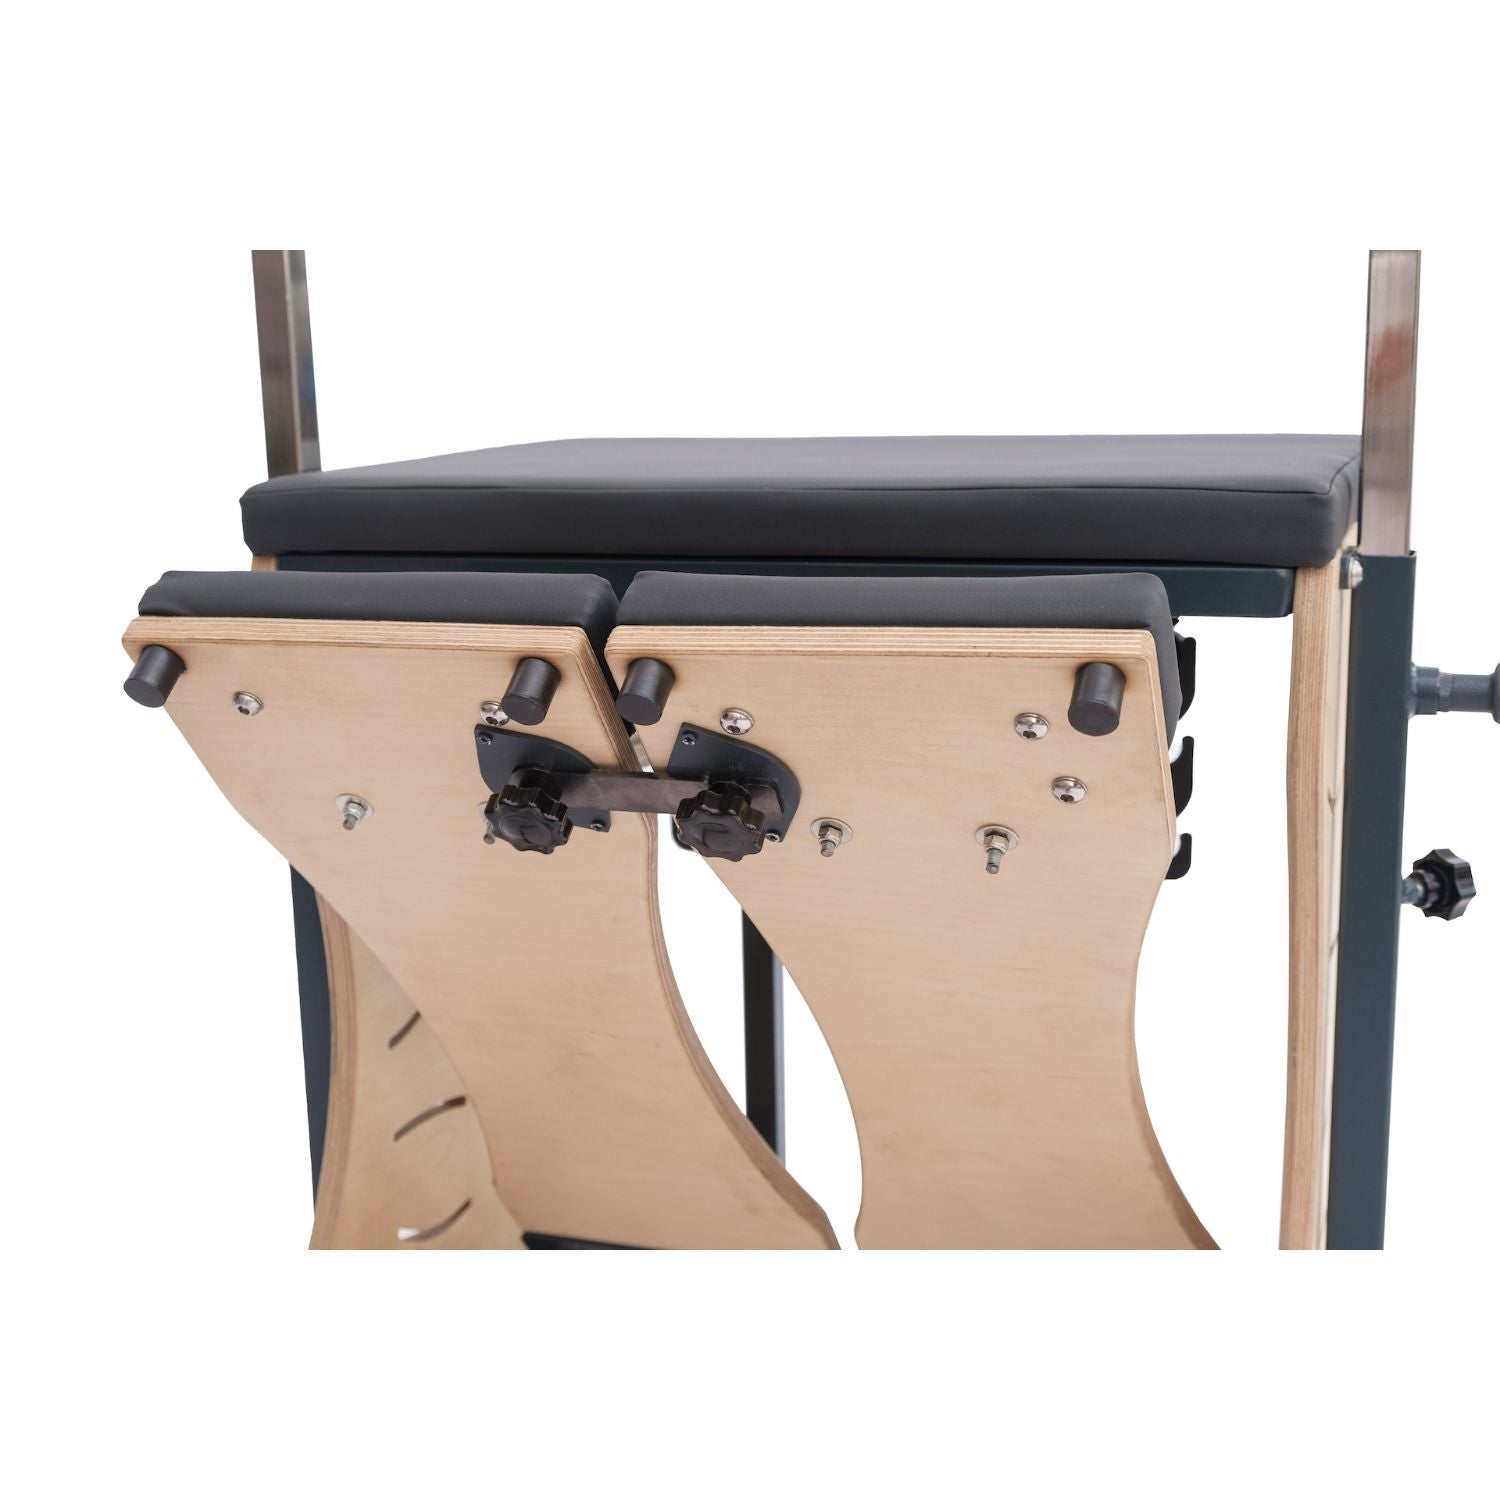 Club EXHALE - Wunda Chair is a multifunctional Pilates machine